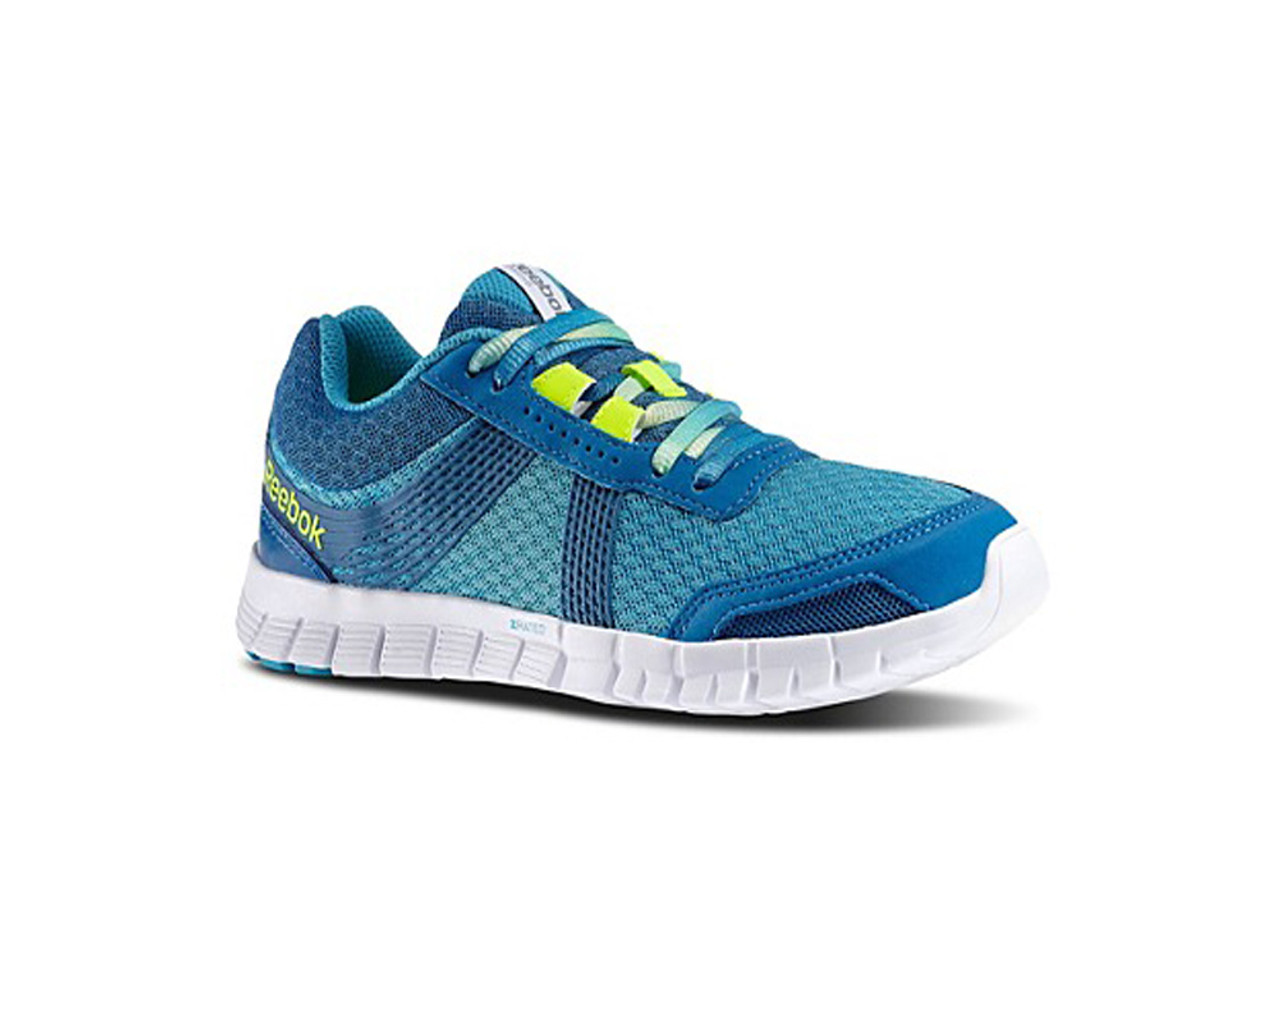 Reebok Women's Z Fury Tempo Running Shoes Blue | Discount Reebok Ladies Athletic & More - Shoolu.com |